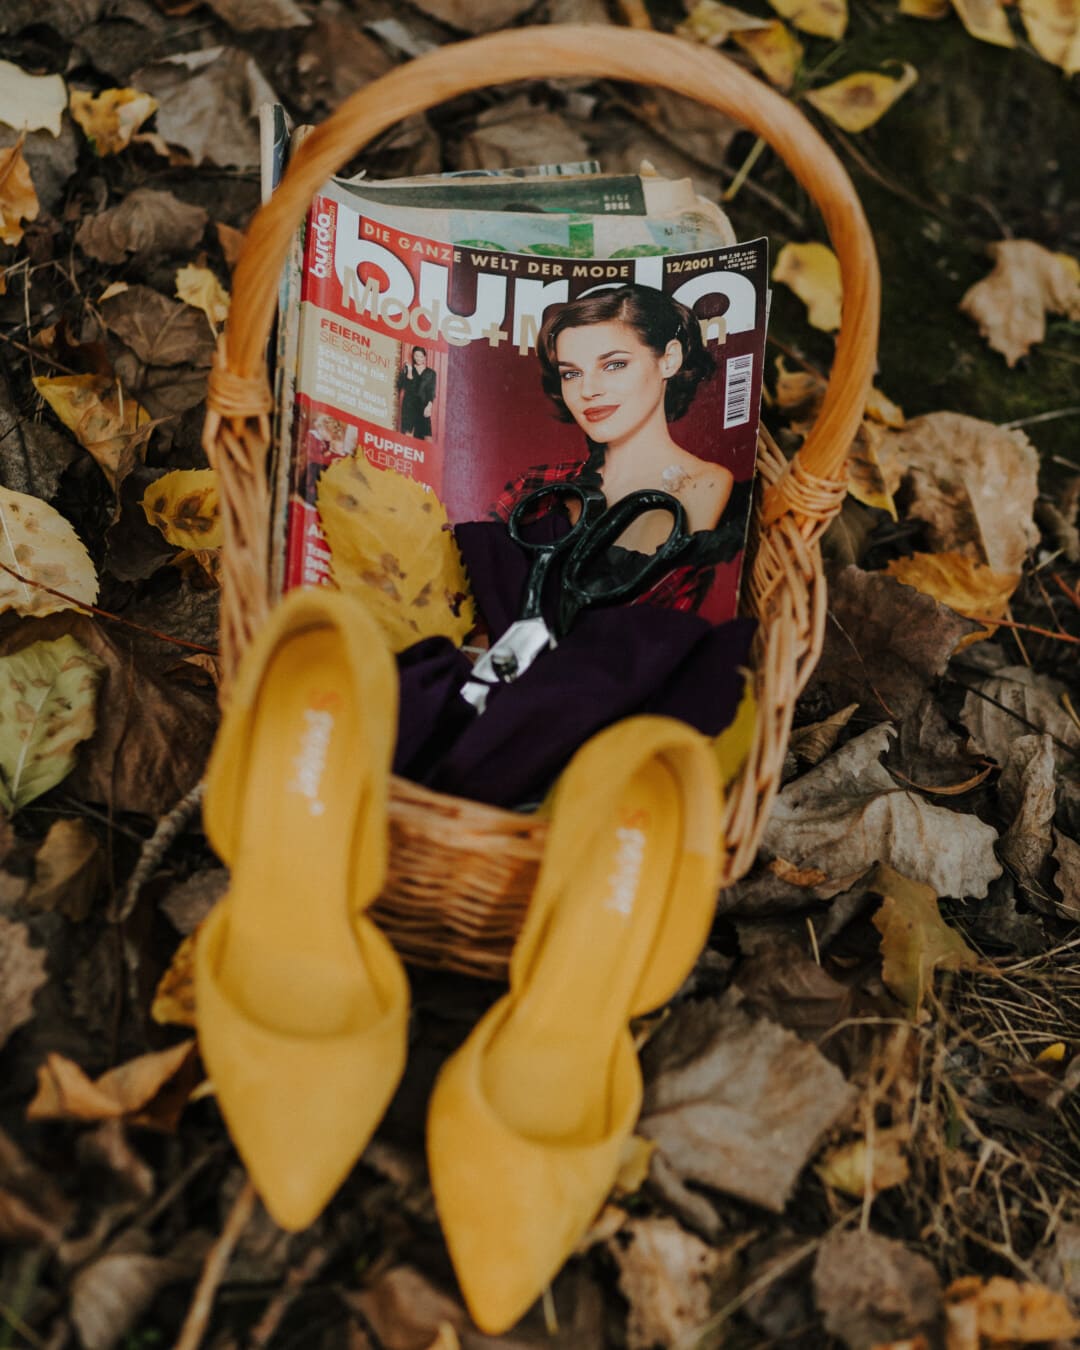 wicker basket, newspaper, heels, scissors, fashion, footwear, nature, color, leaf, vintage